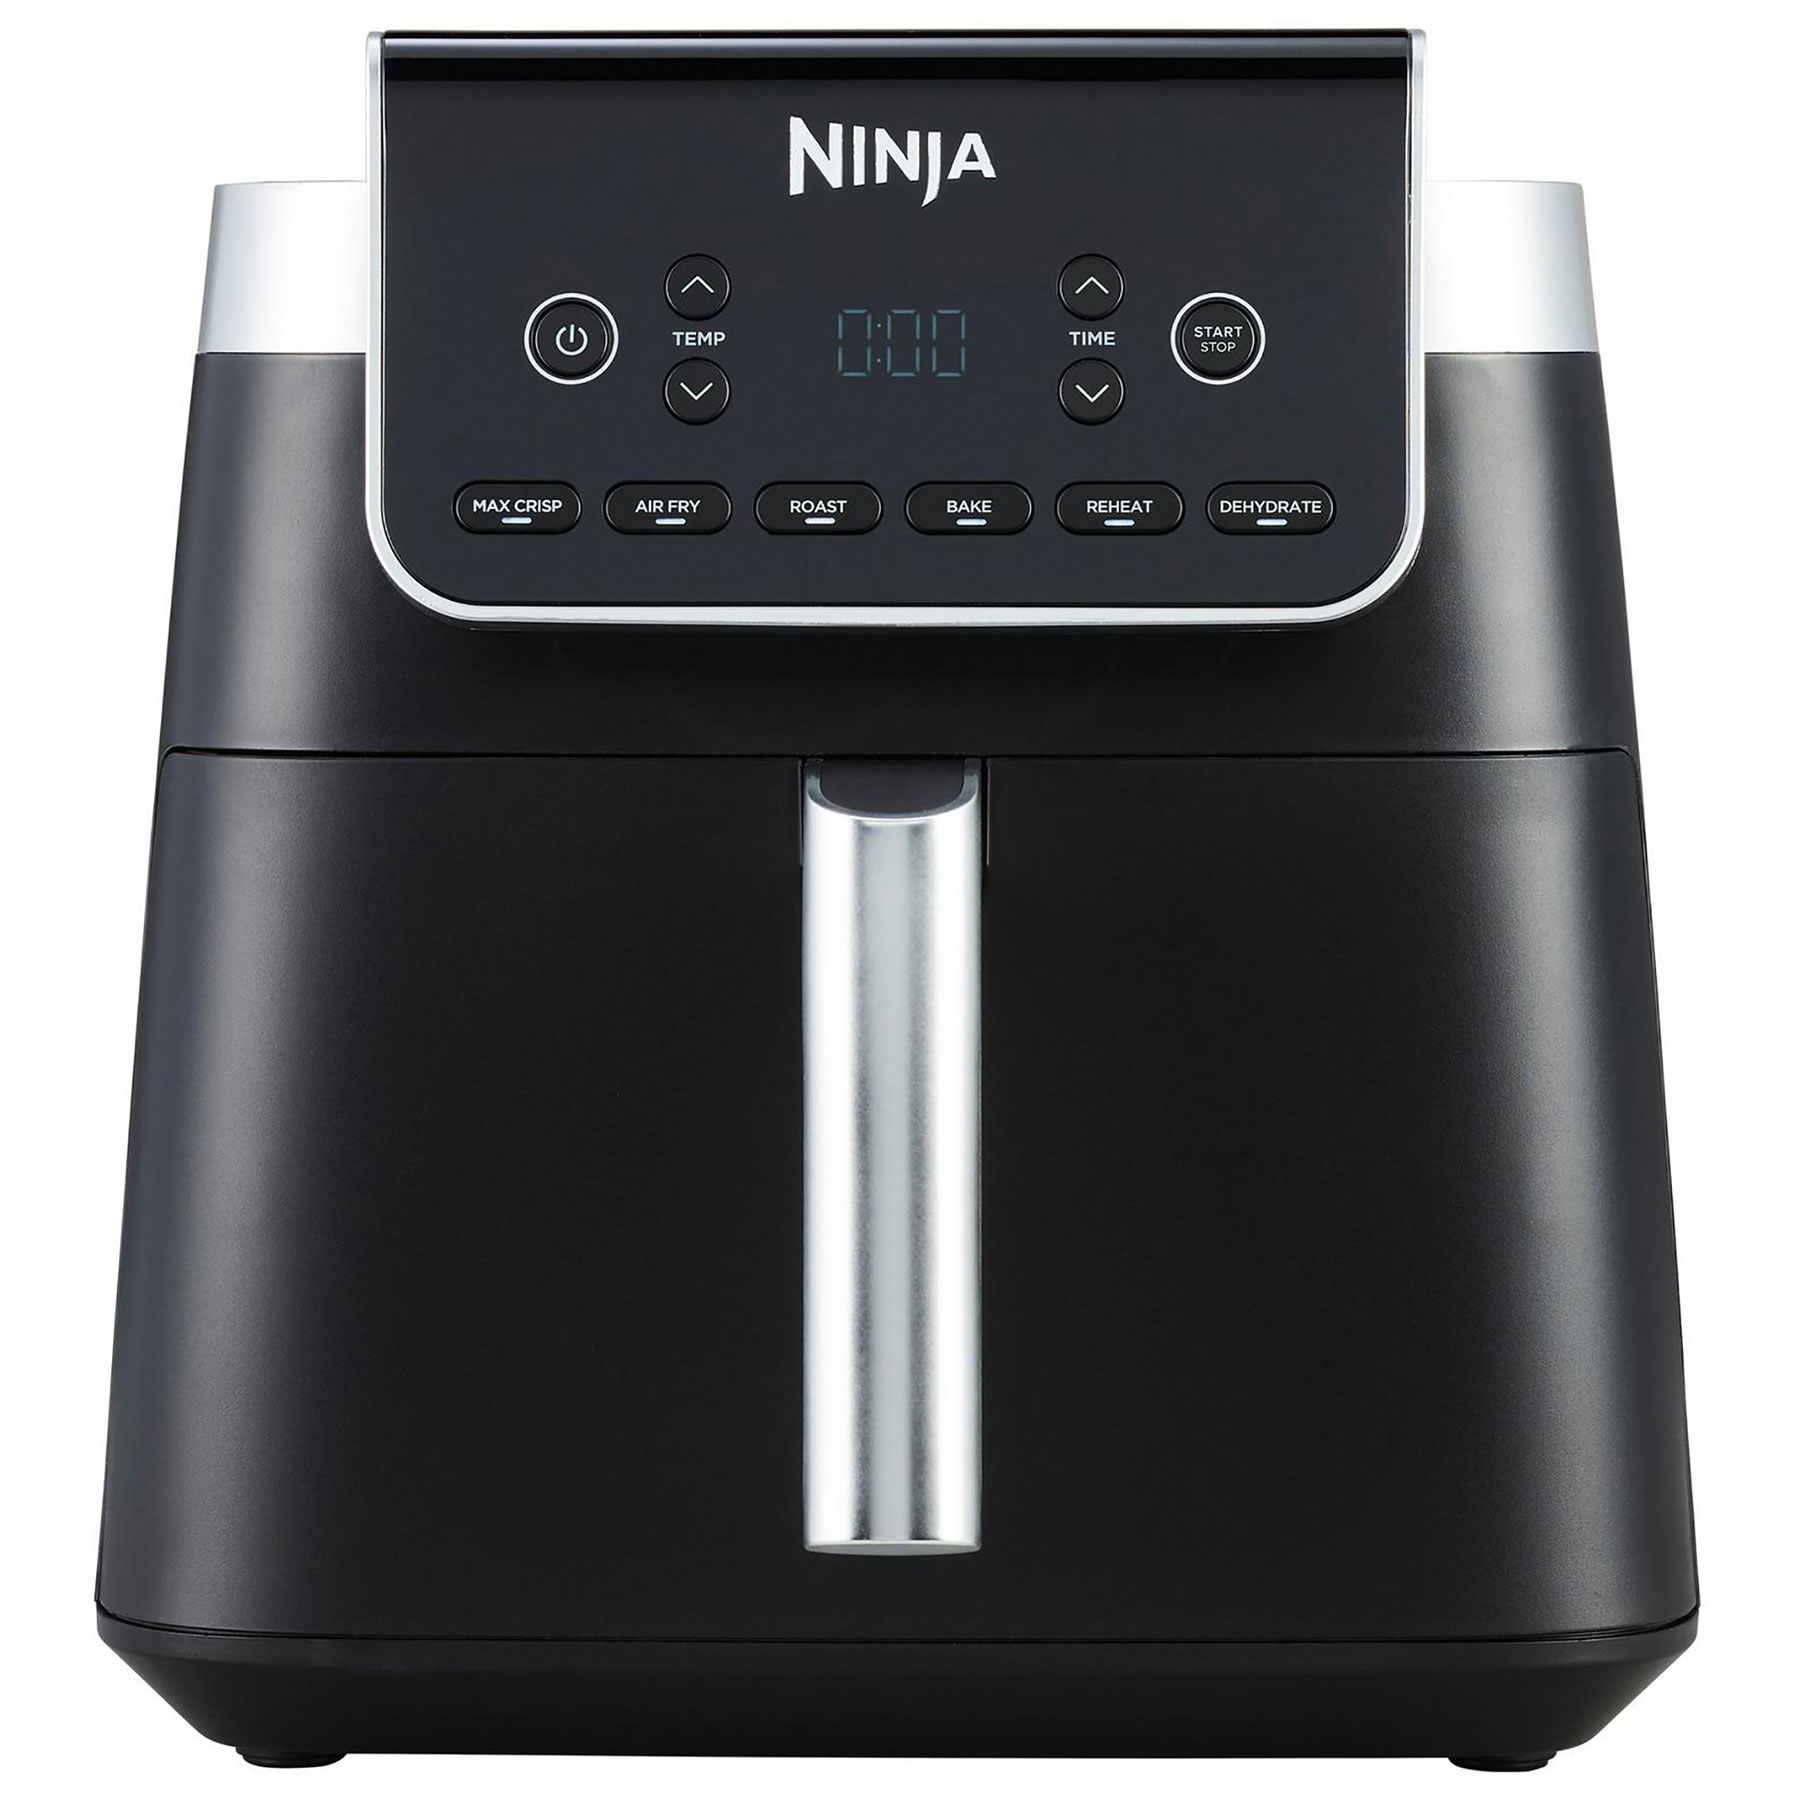 Ninja AF180UK Ninja MAX PRO Air Fryer Black 6 2L